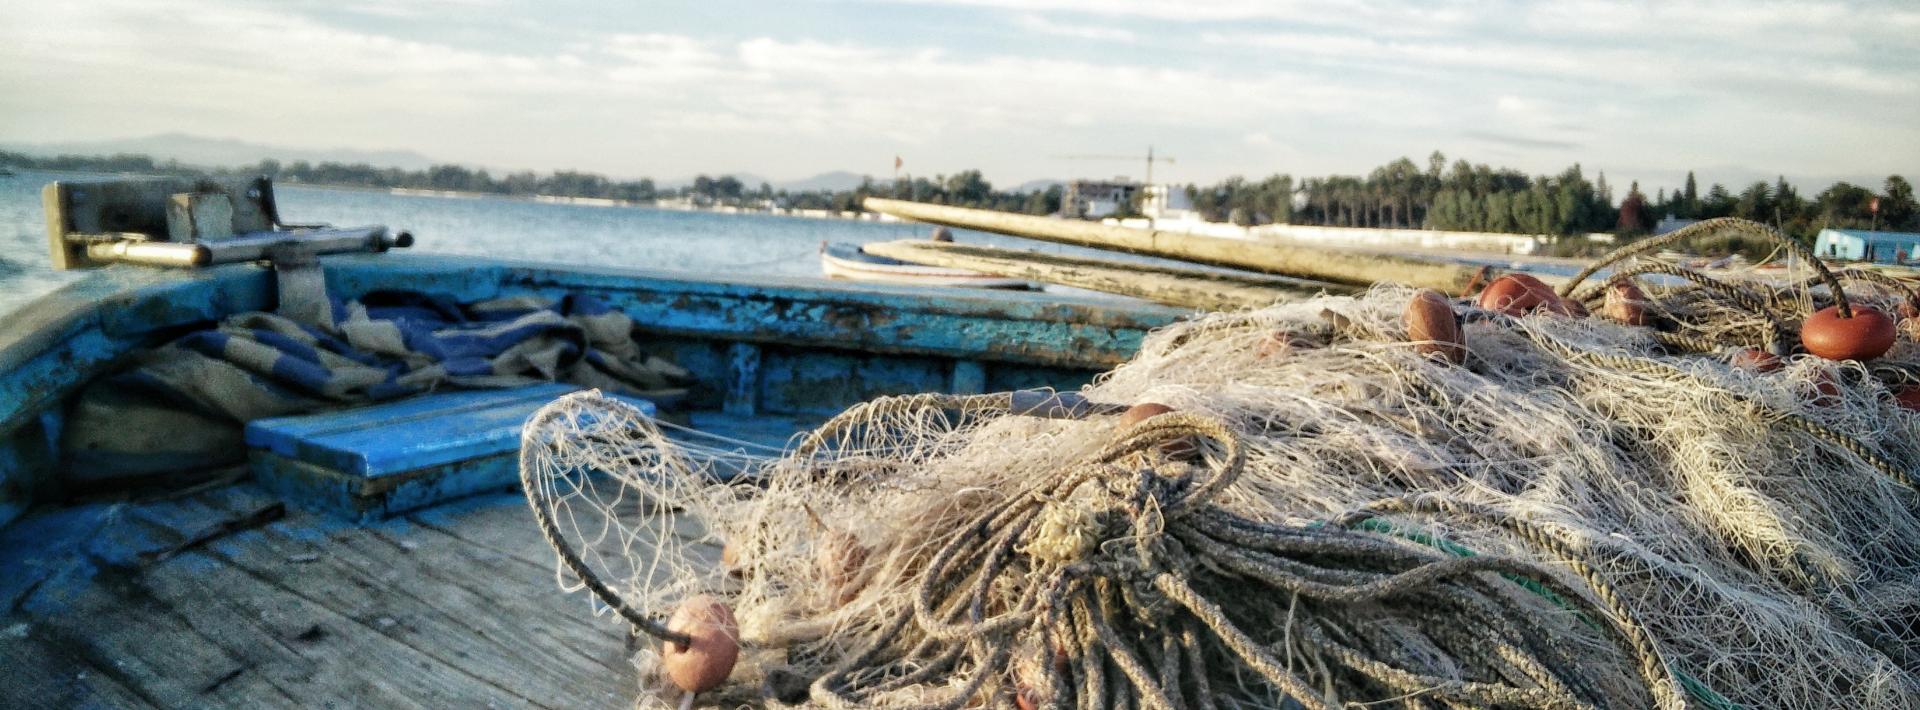 fishing nets in Tunisia